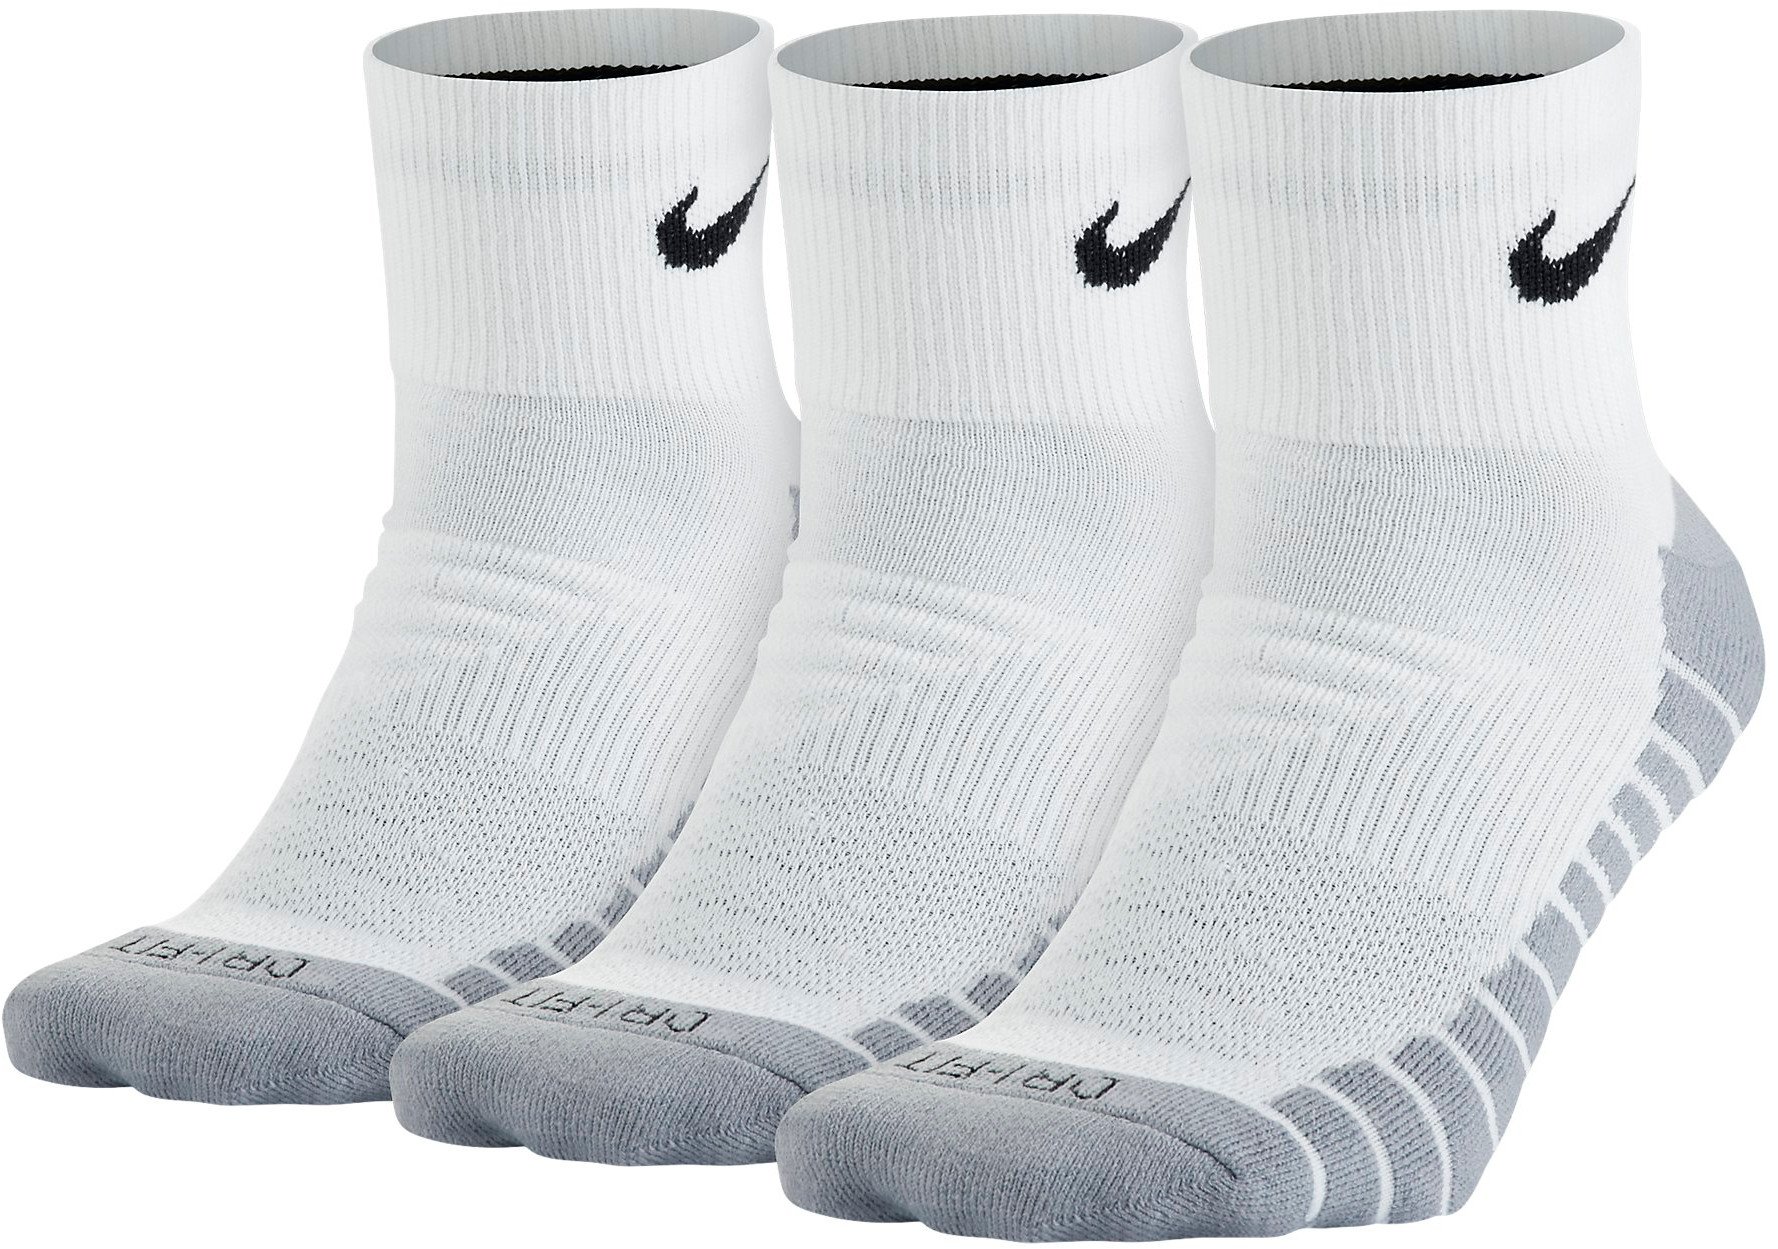 Ponožky Nike Dry Cushion Quarter (tři páry)